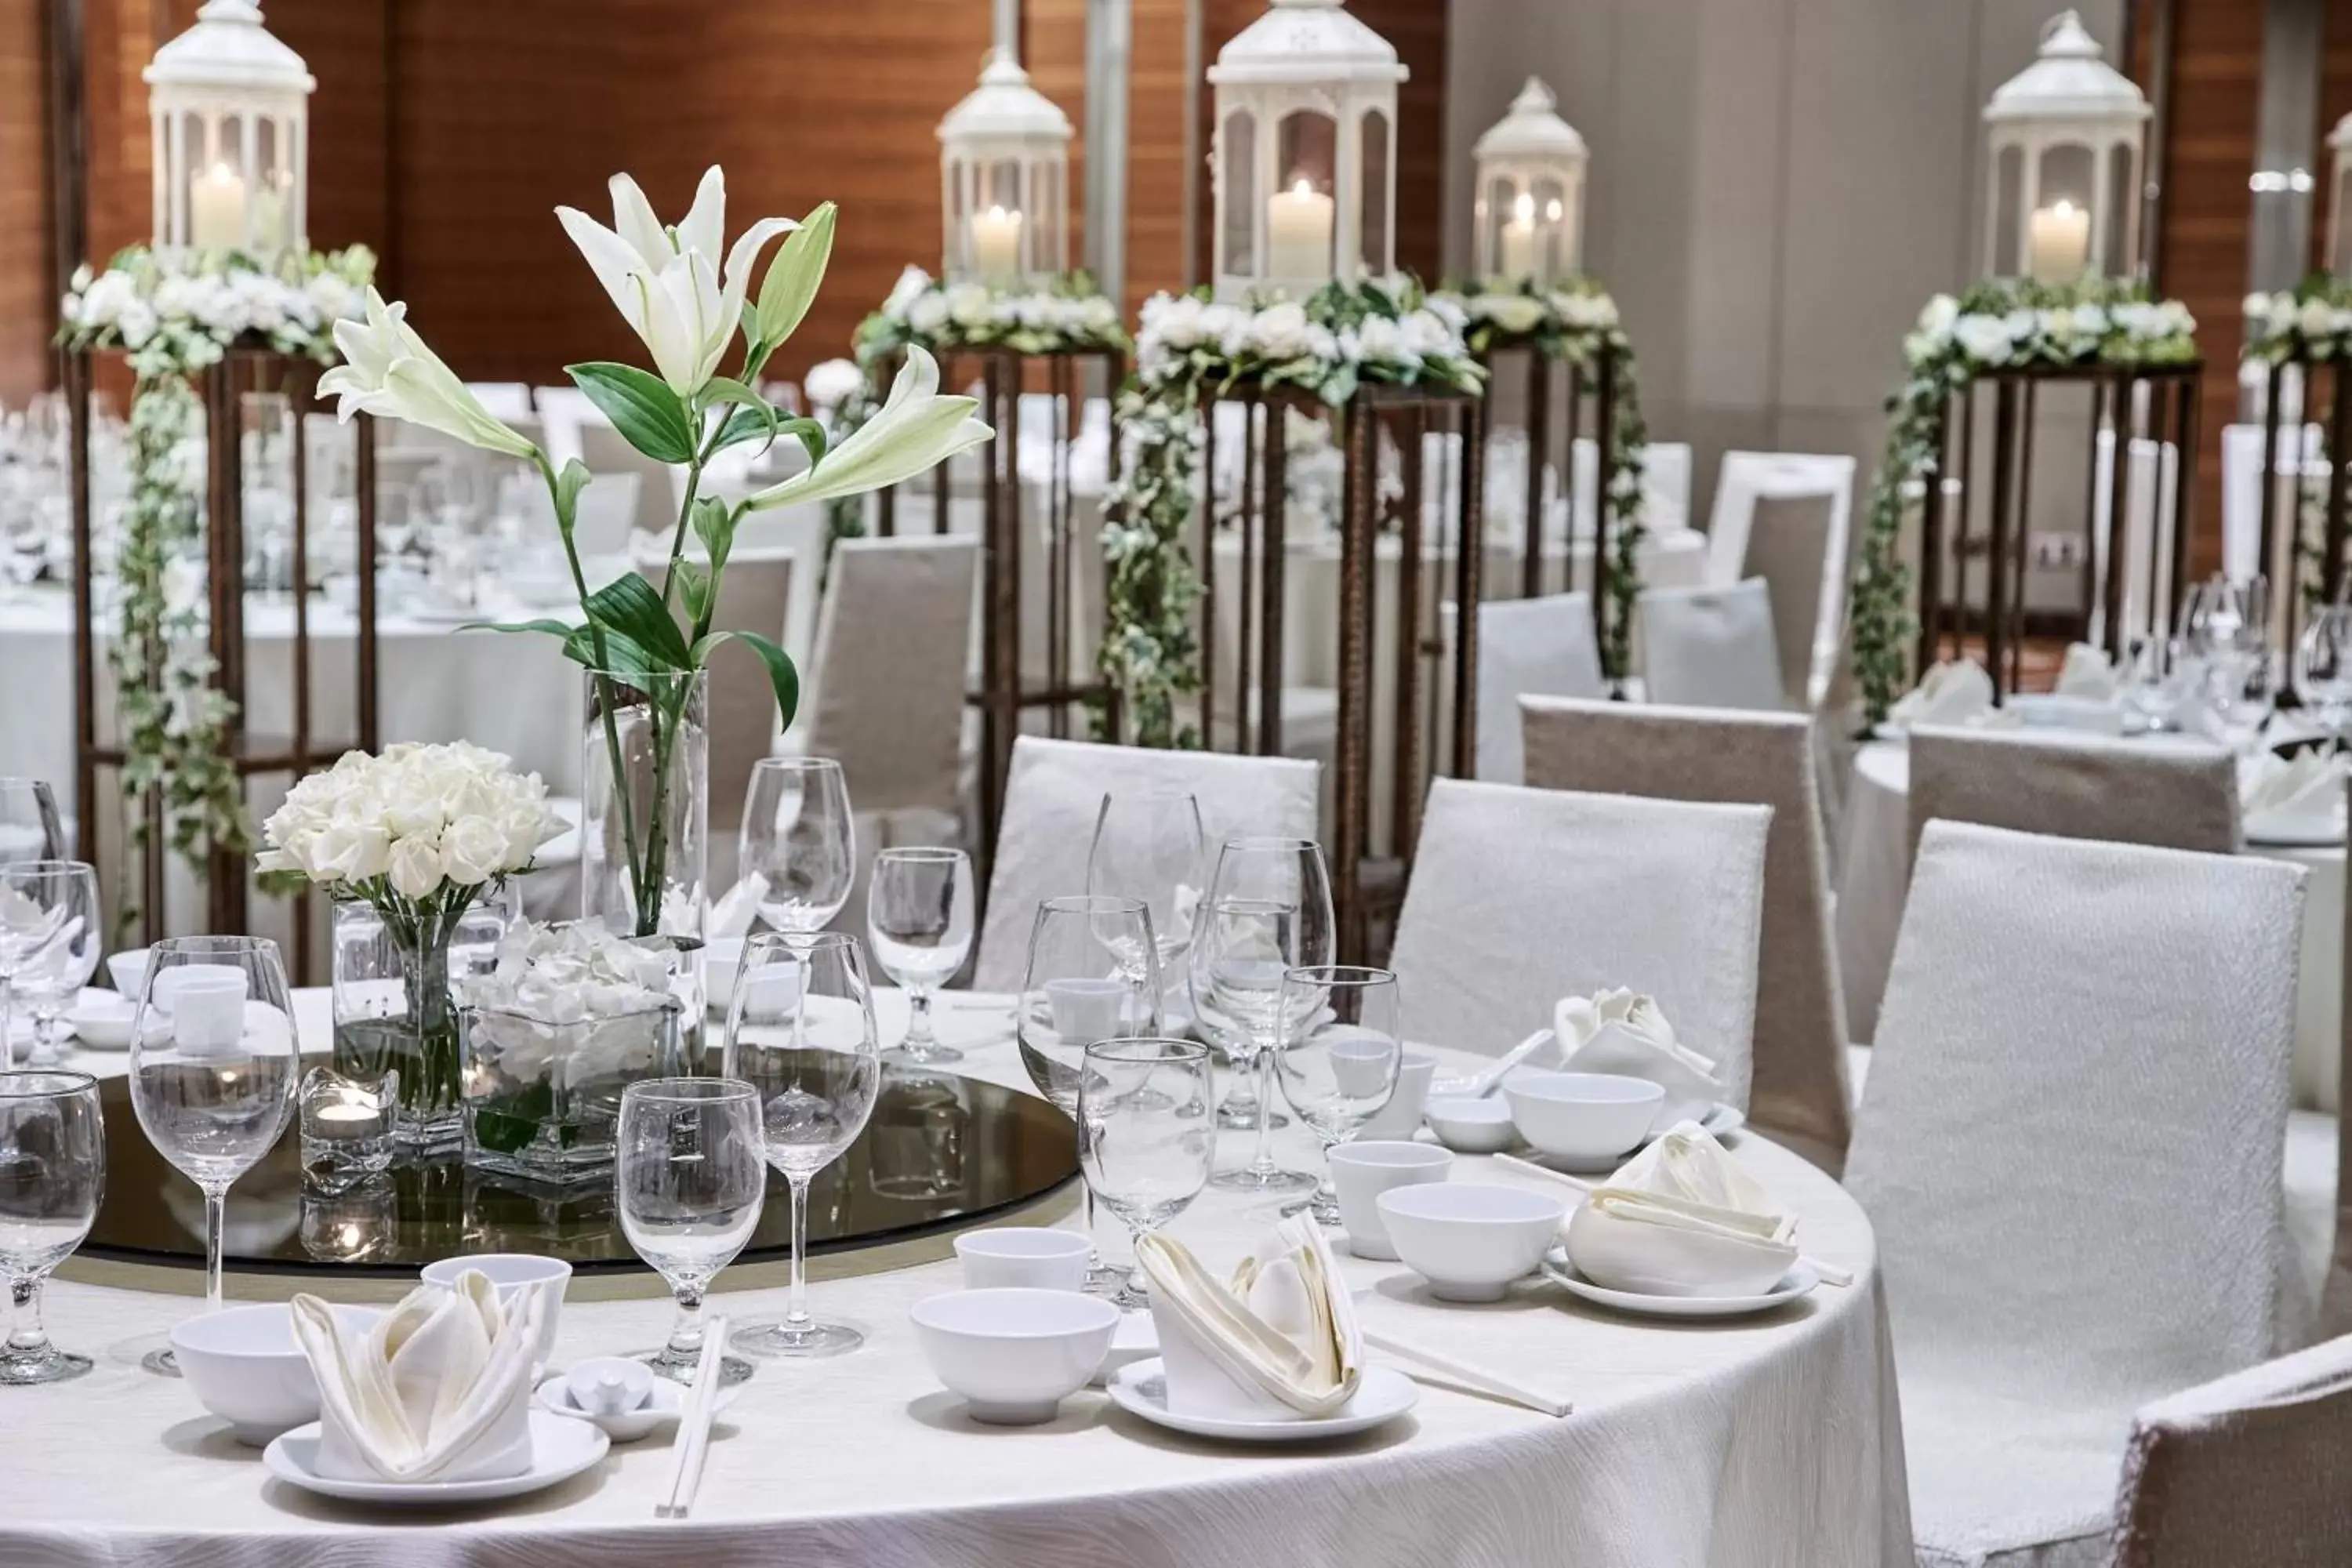 Banquet/Function facilities, Restaurant/Places to Eat in Renaissance Johor Bahru Hotel